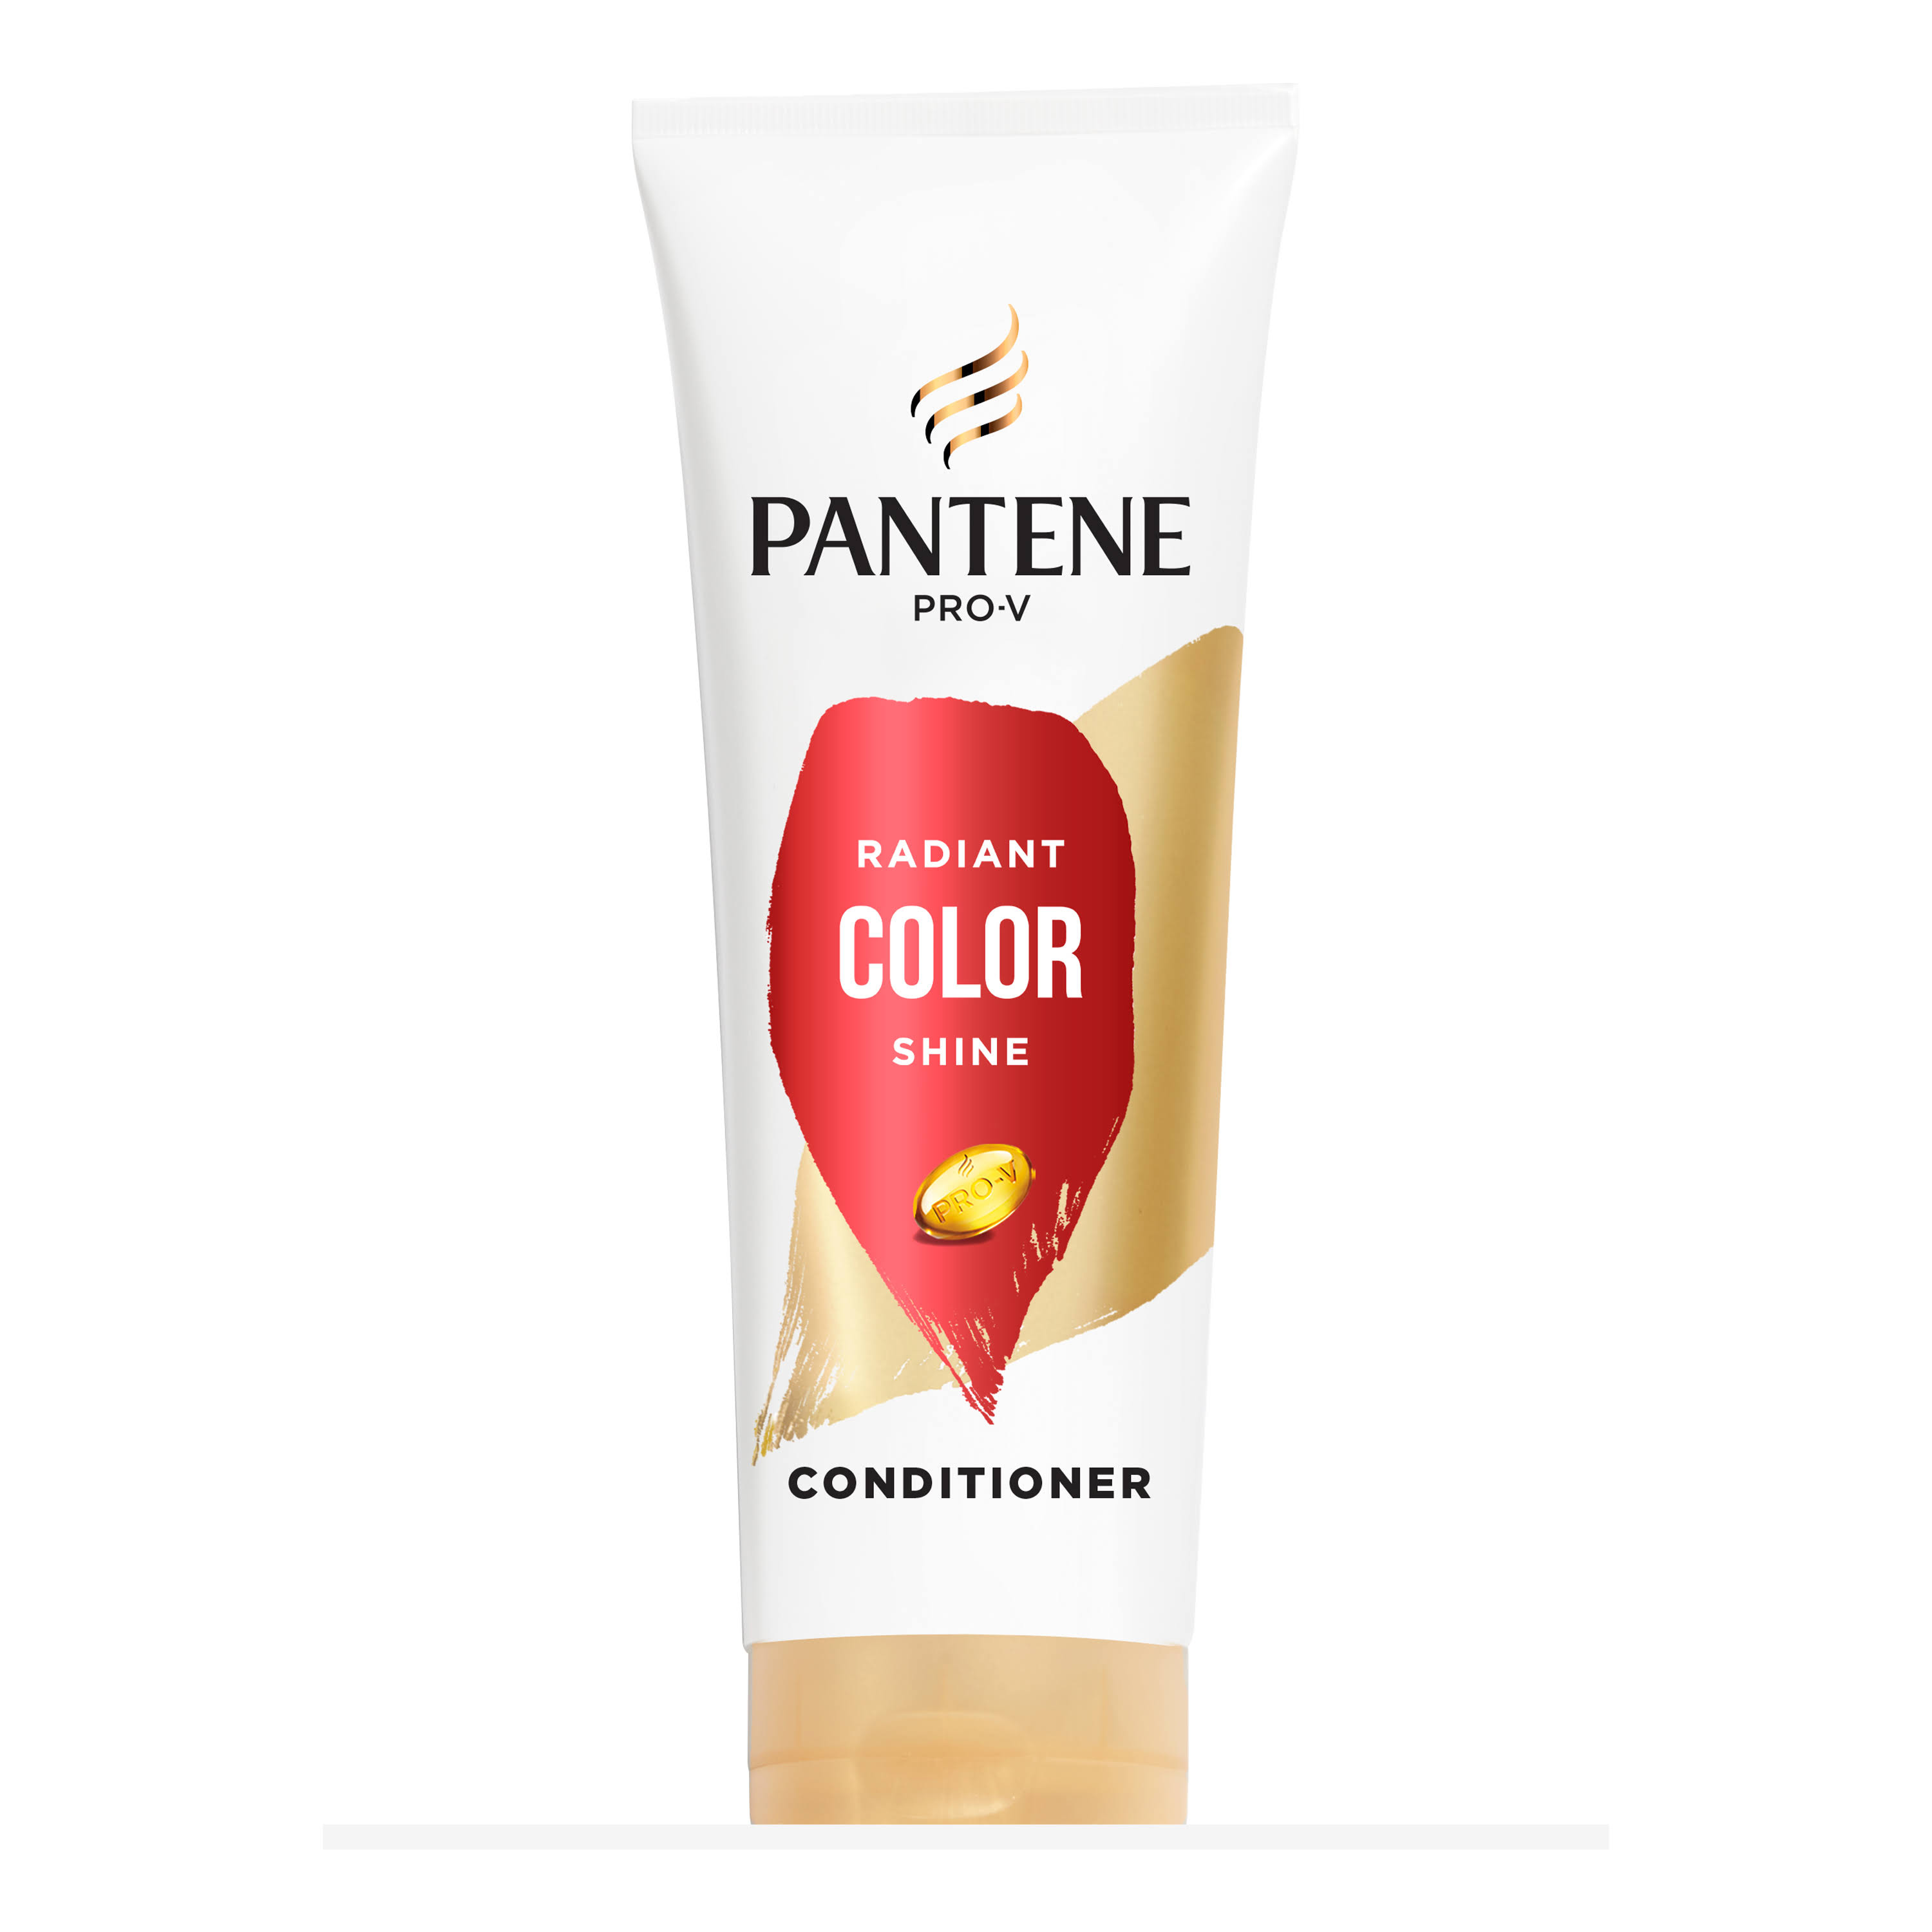 Pantene Pro-V Radiant Color Shine Conditioner, 10.4oz/308mL